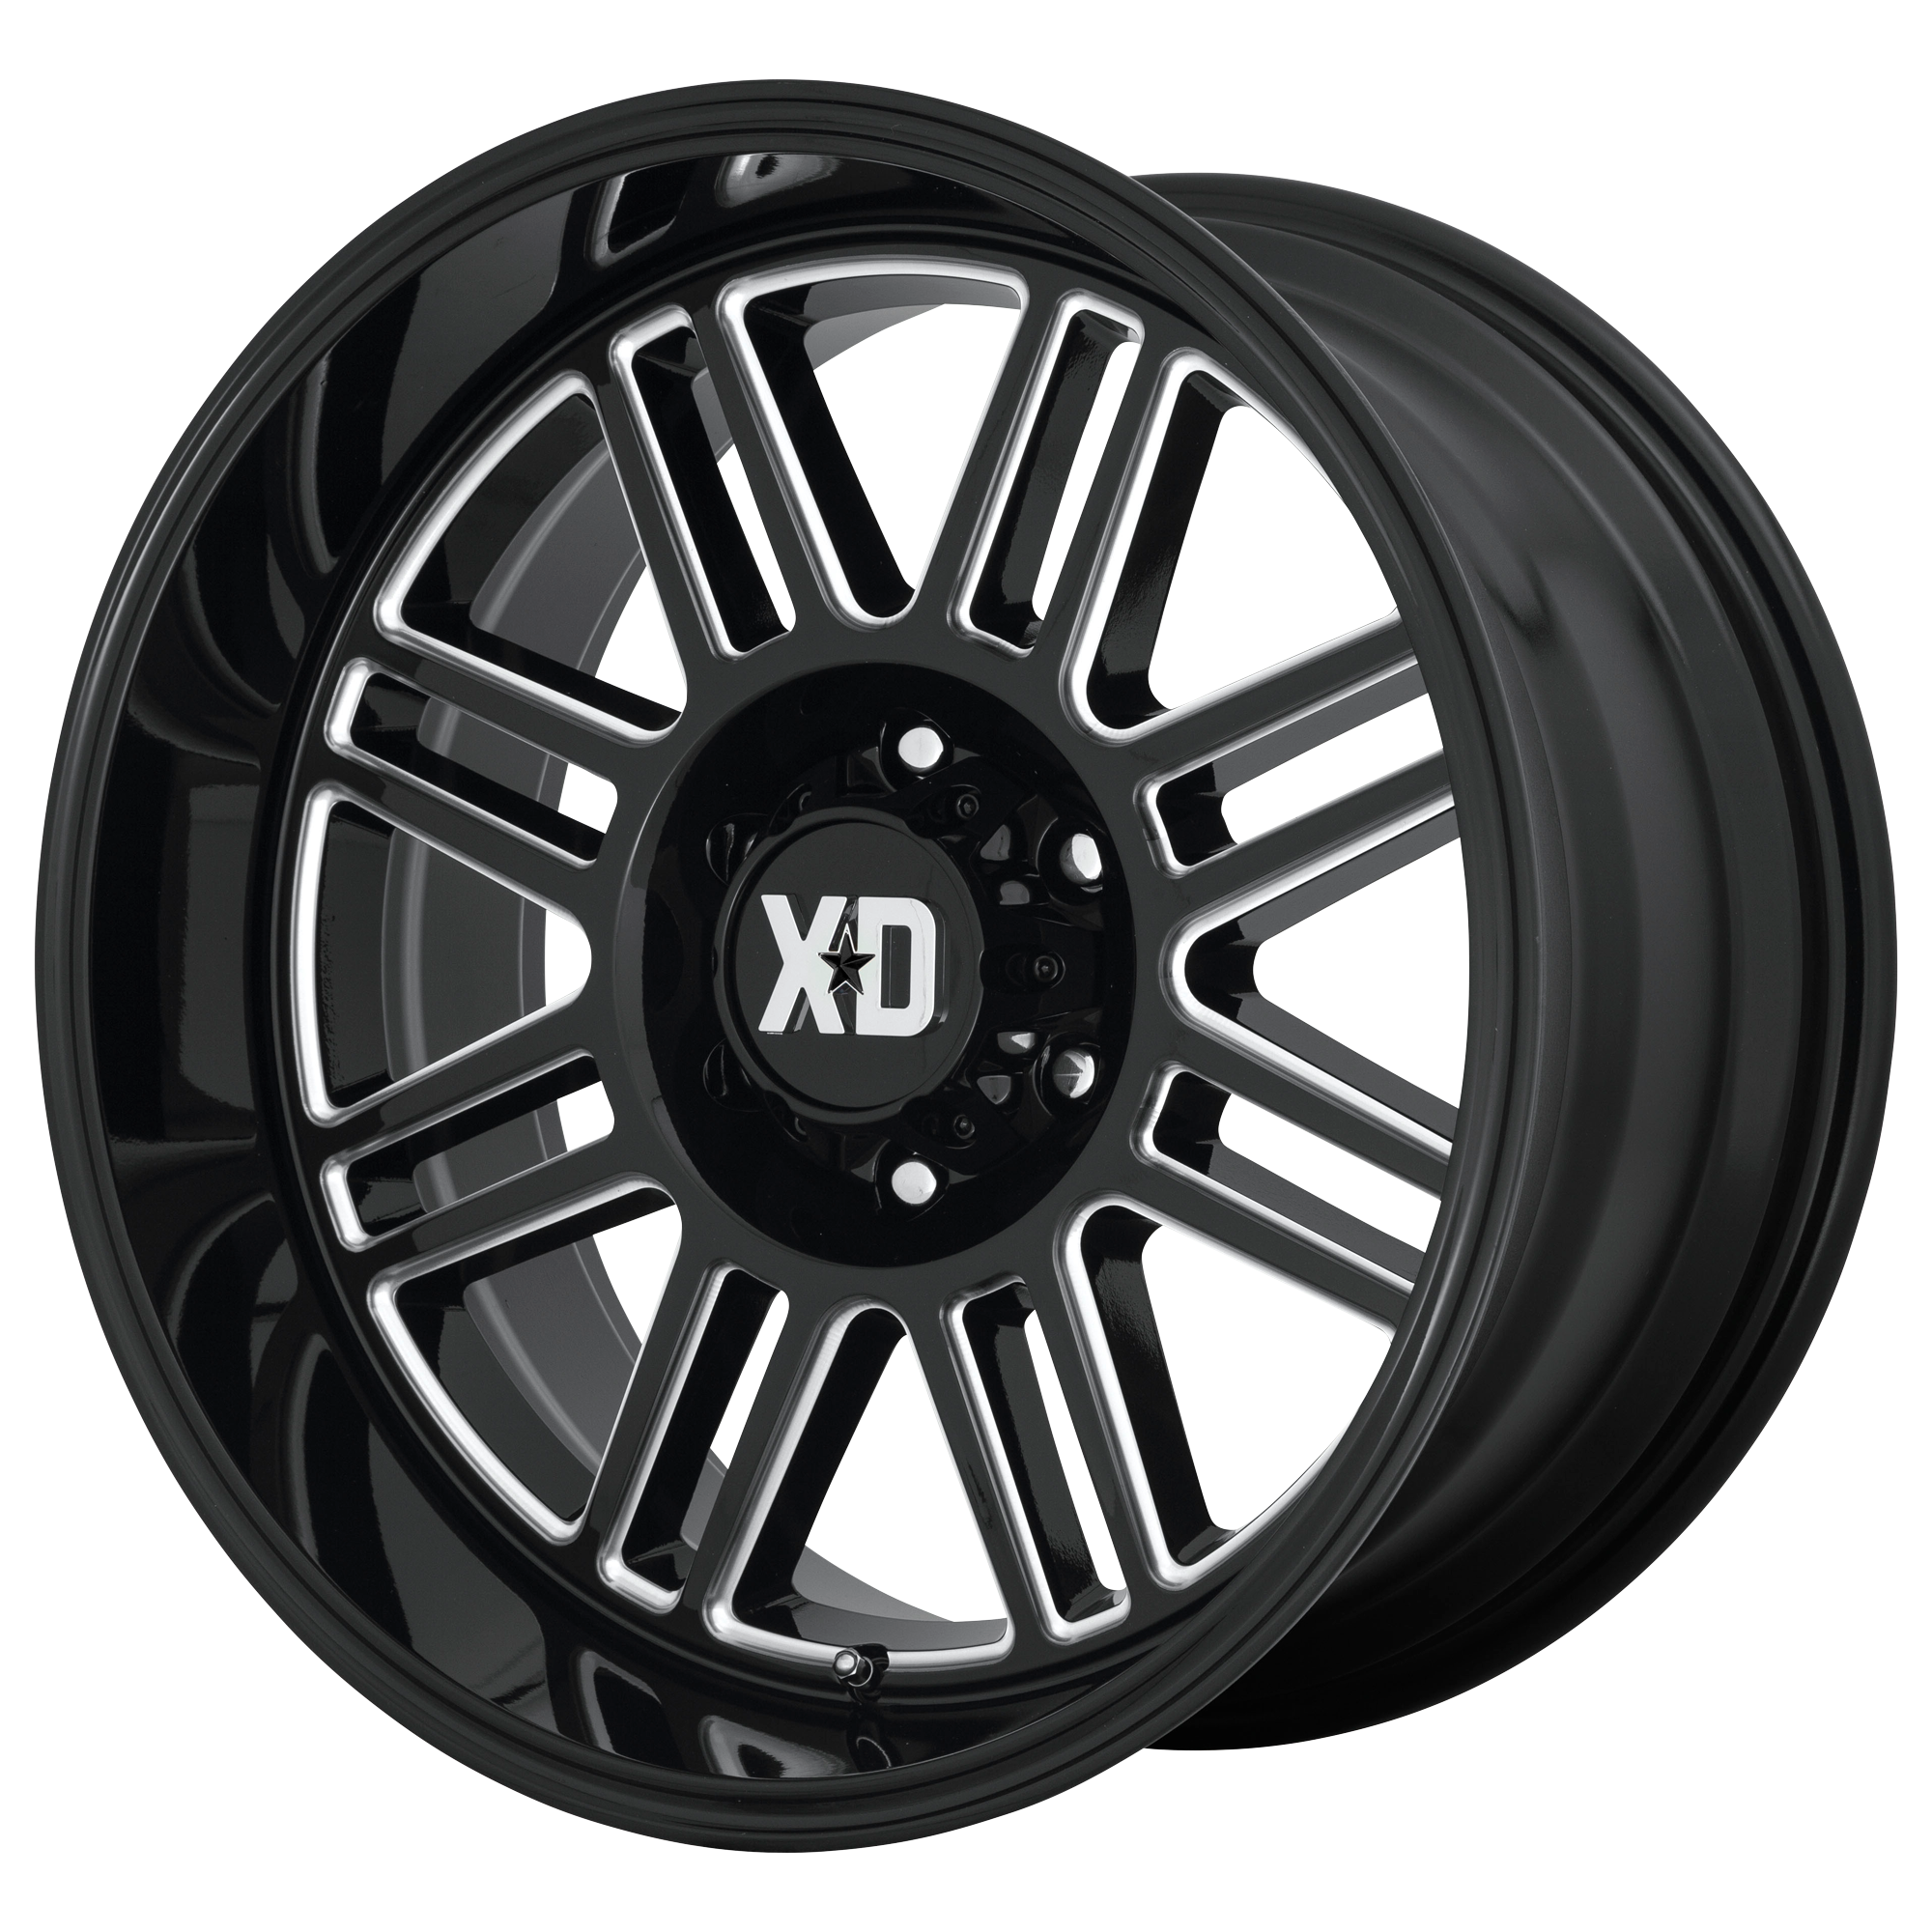 XD 20"x9" Non-Chrome Gloss Black Milled Custom Wheel ARSWCWXD85029080300